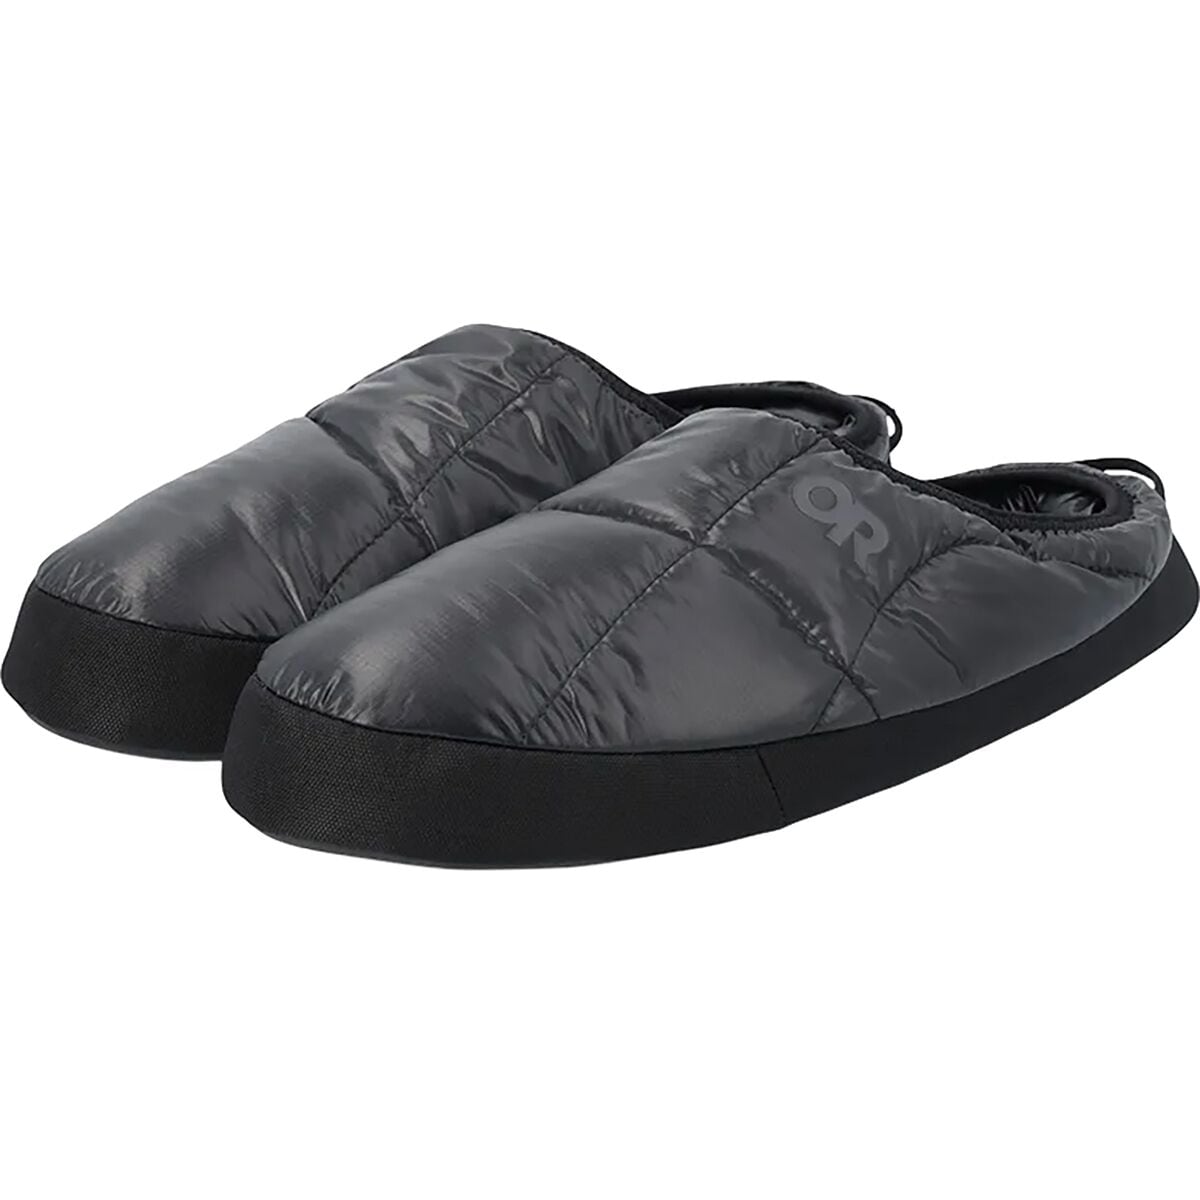 Outdoor Research Tundra Slip-On Aerogel Booties - Men's - Footwear